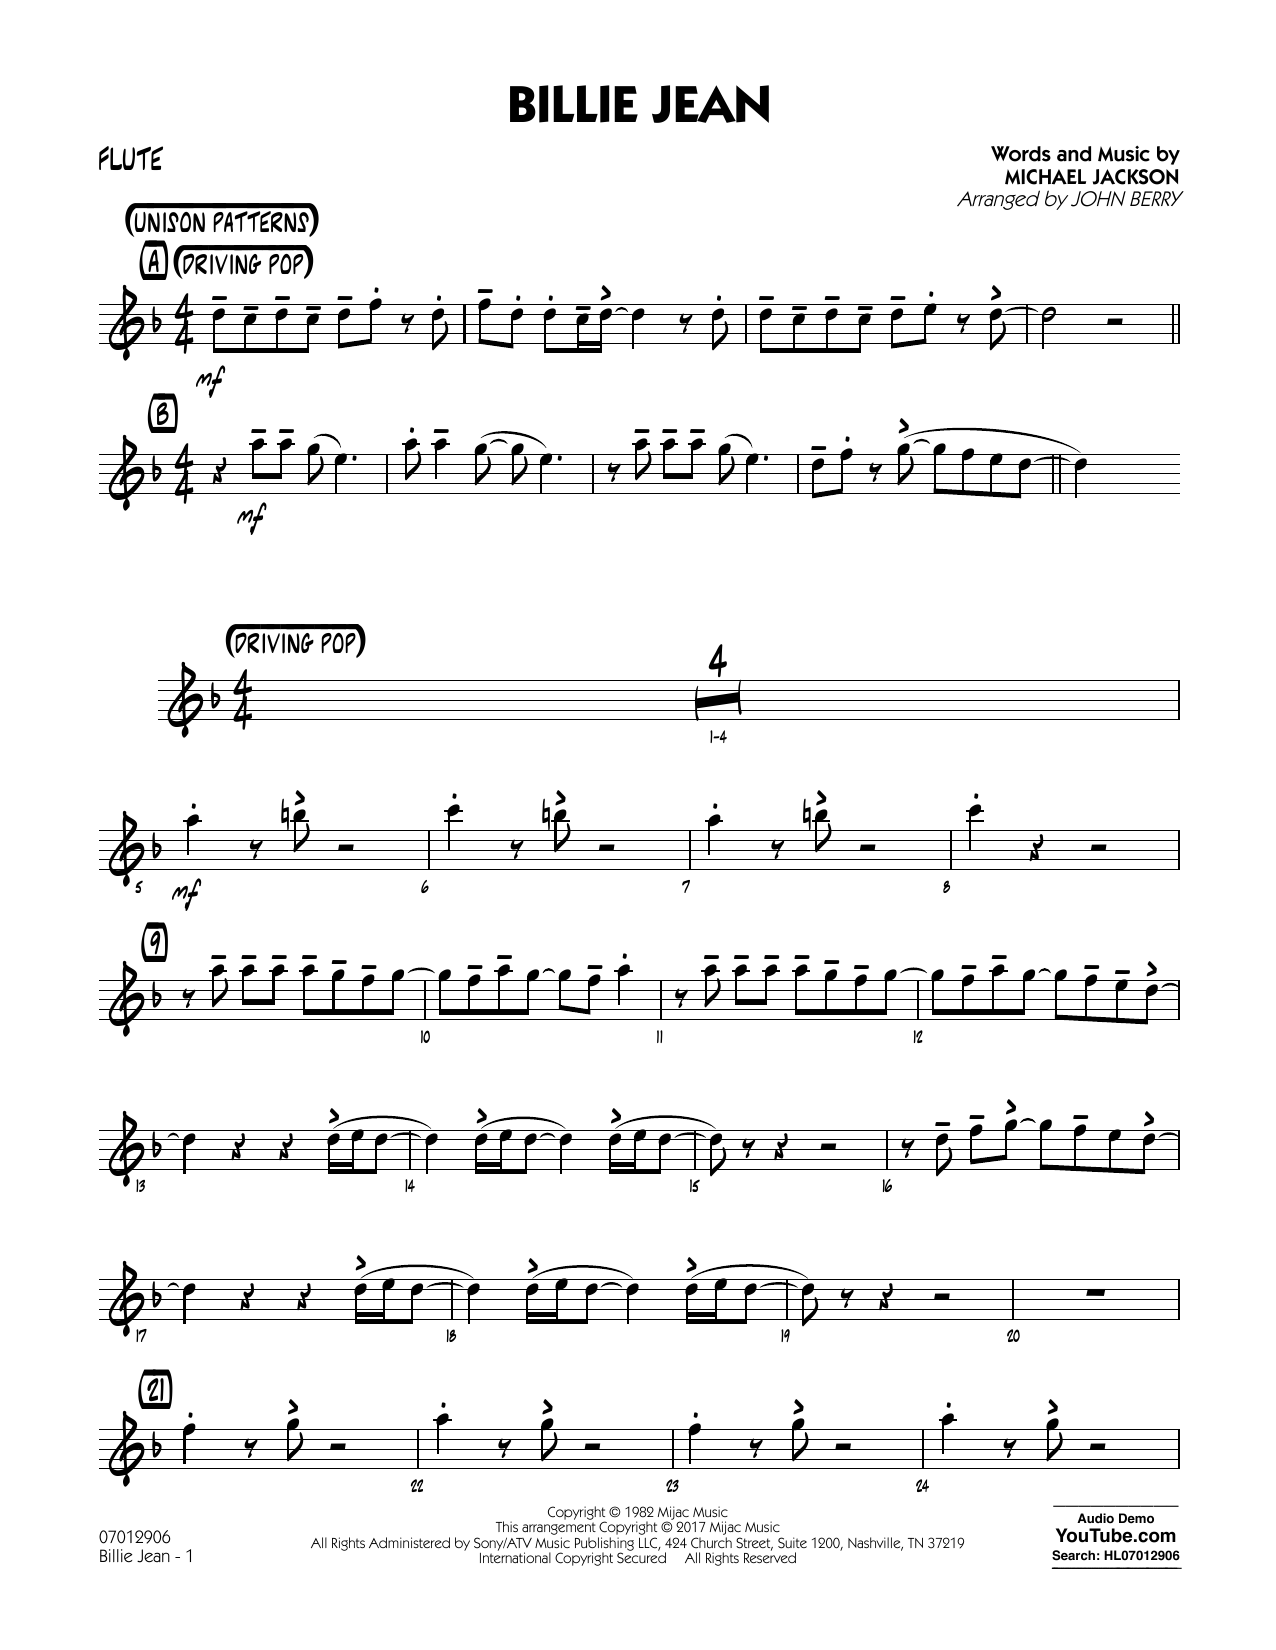 composite saint Ours John Berry "Billie Jean - Flute" Sheet Music Notes | Download Printable PDF  Score 373674